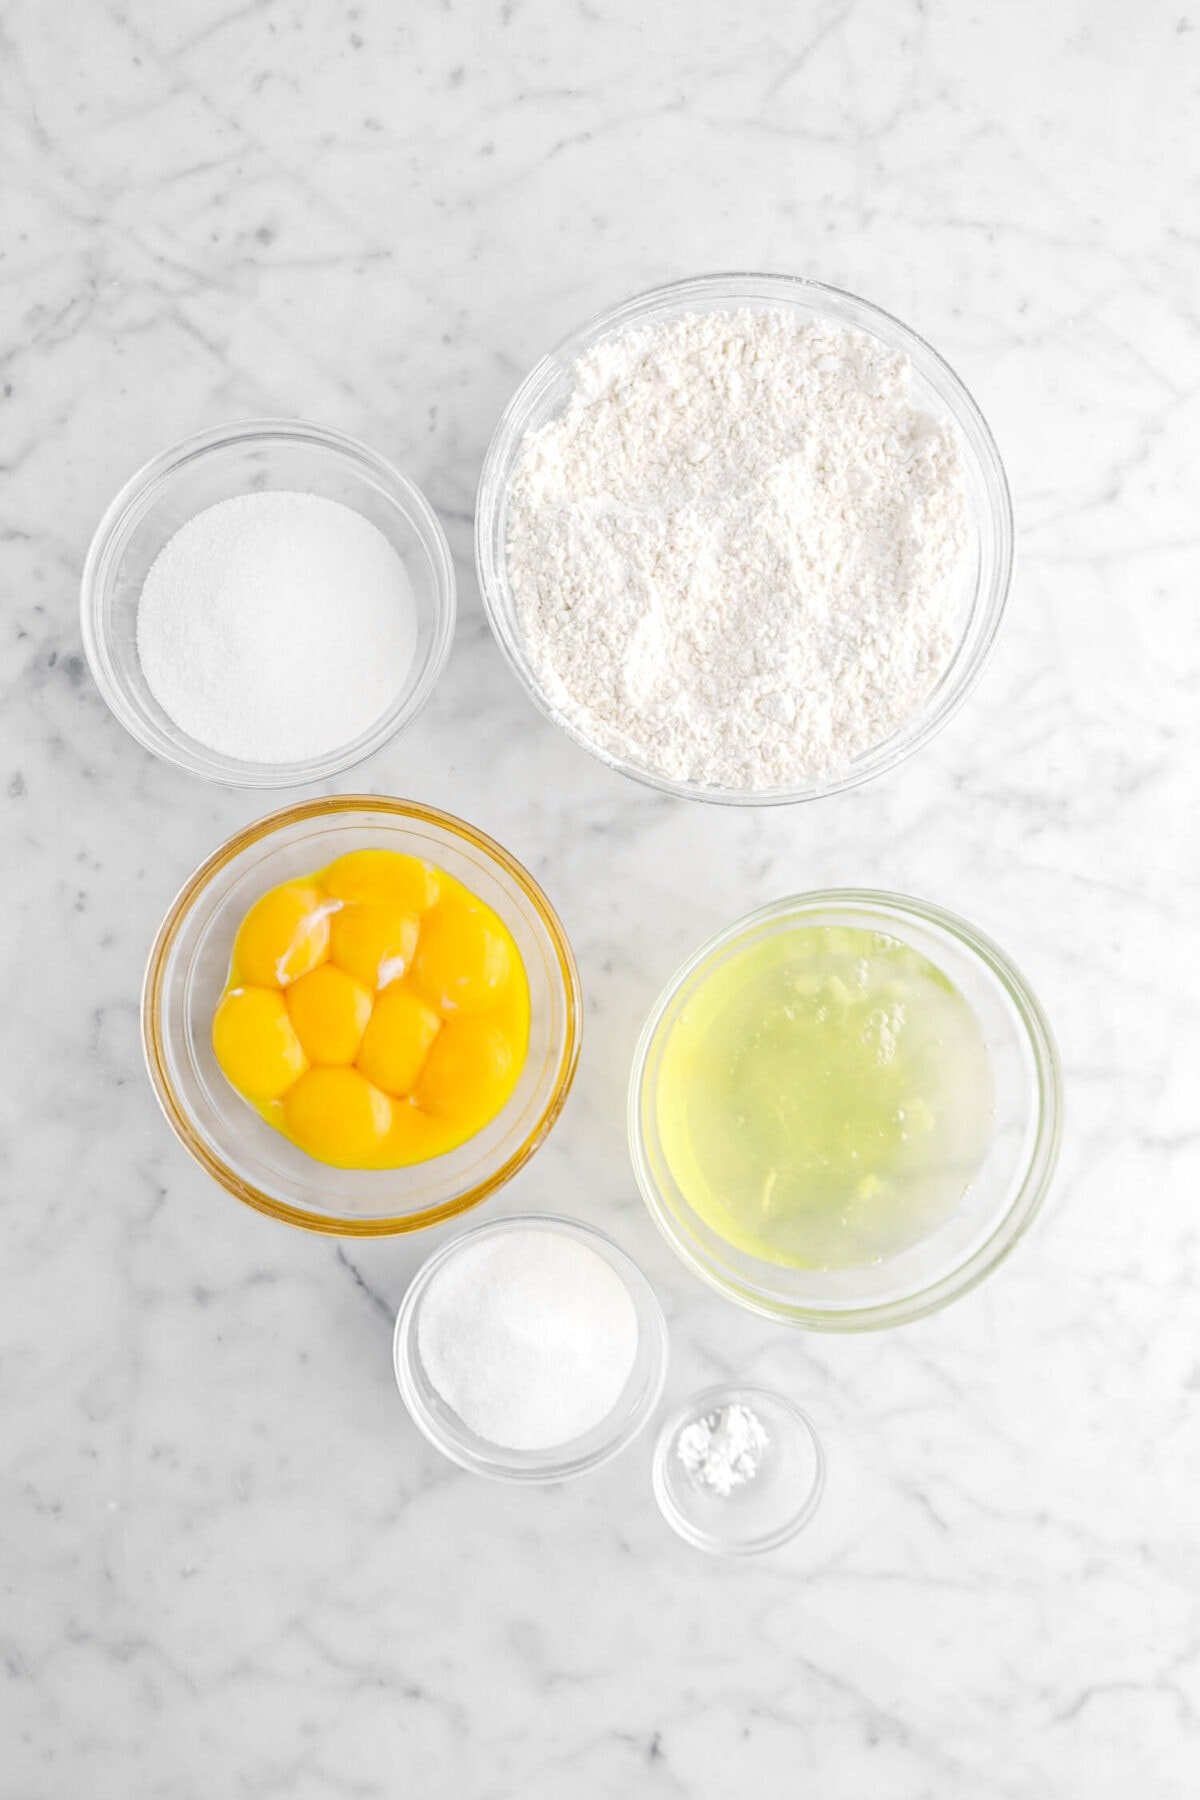 sugar. flour, egg yolks, egg whites, sugar, and cream of tartar on marble surface